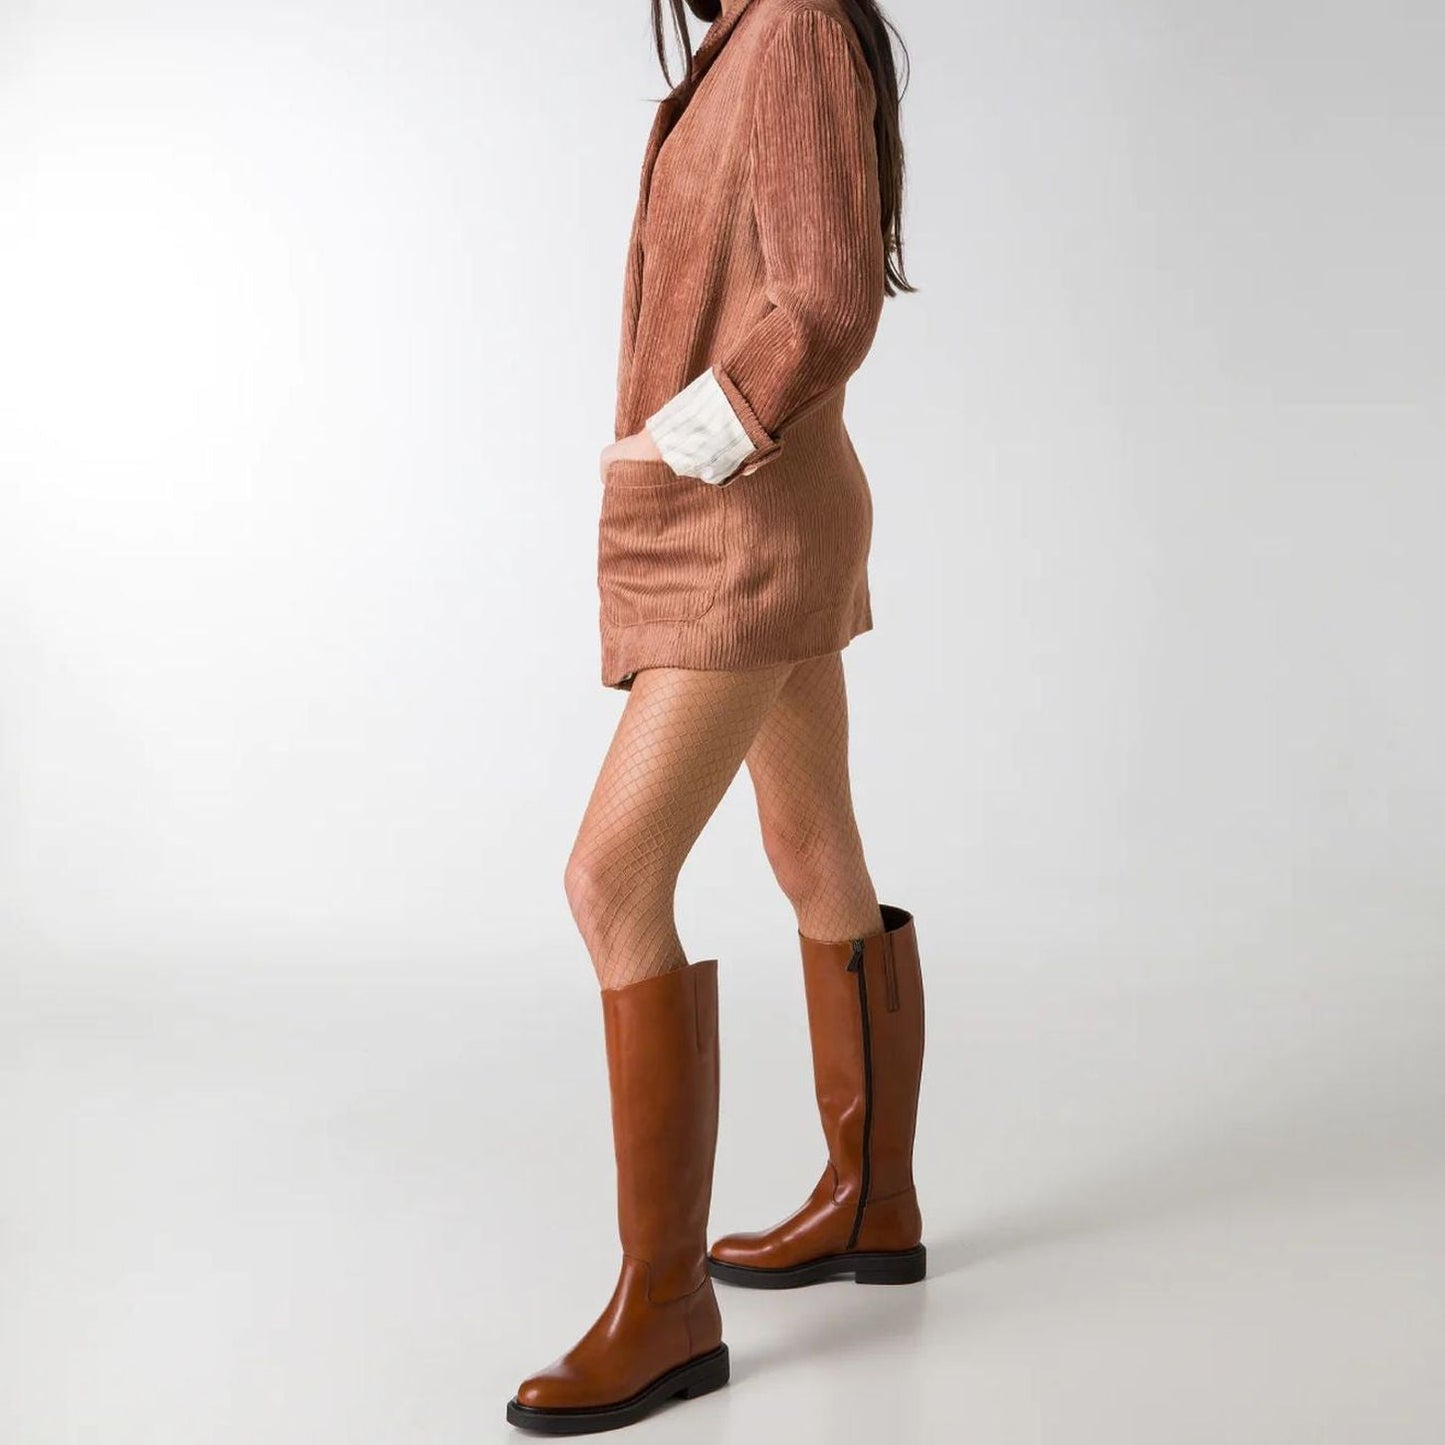 CARMENS moteriški rudi ilgaauliai Brook boots